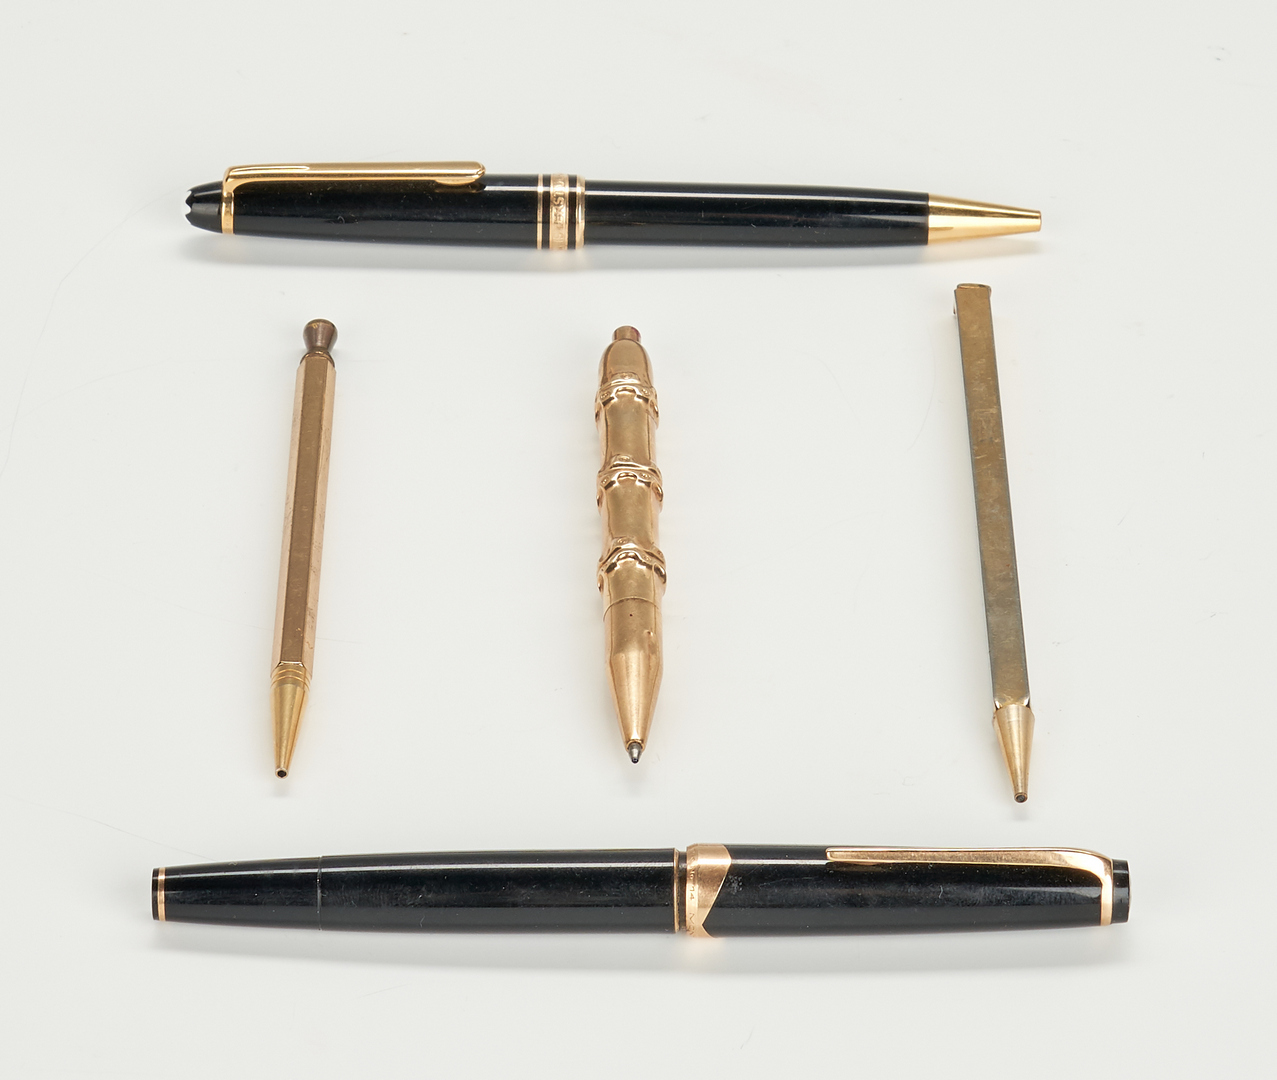 Lot 786: 5 Pens – 2 Montblanc, 2 gold color, 1 Marked 14k